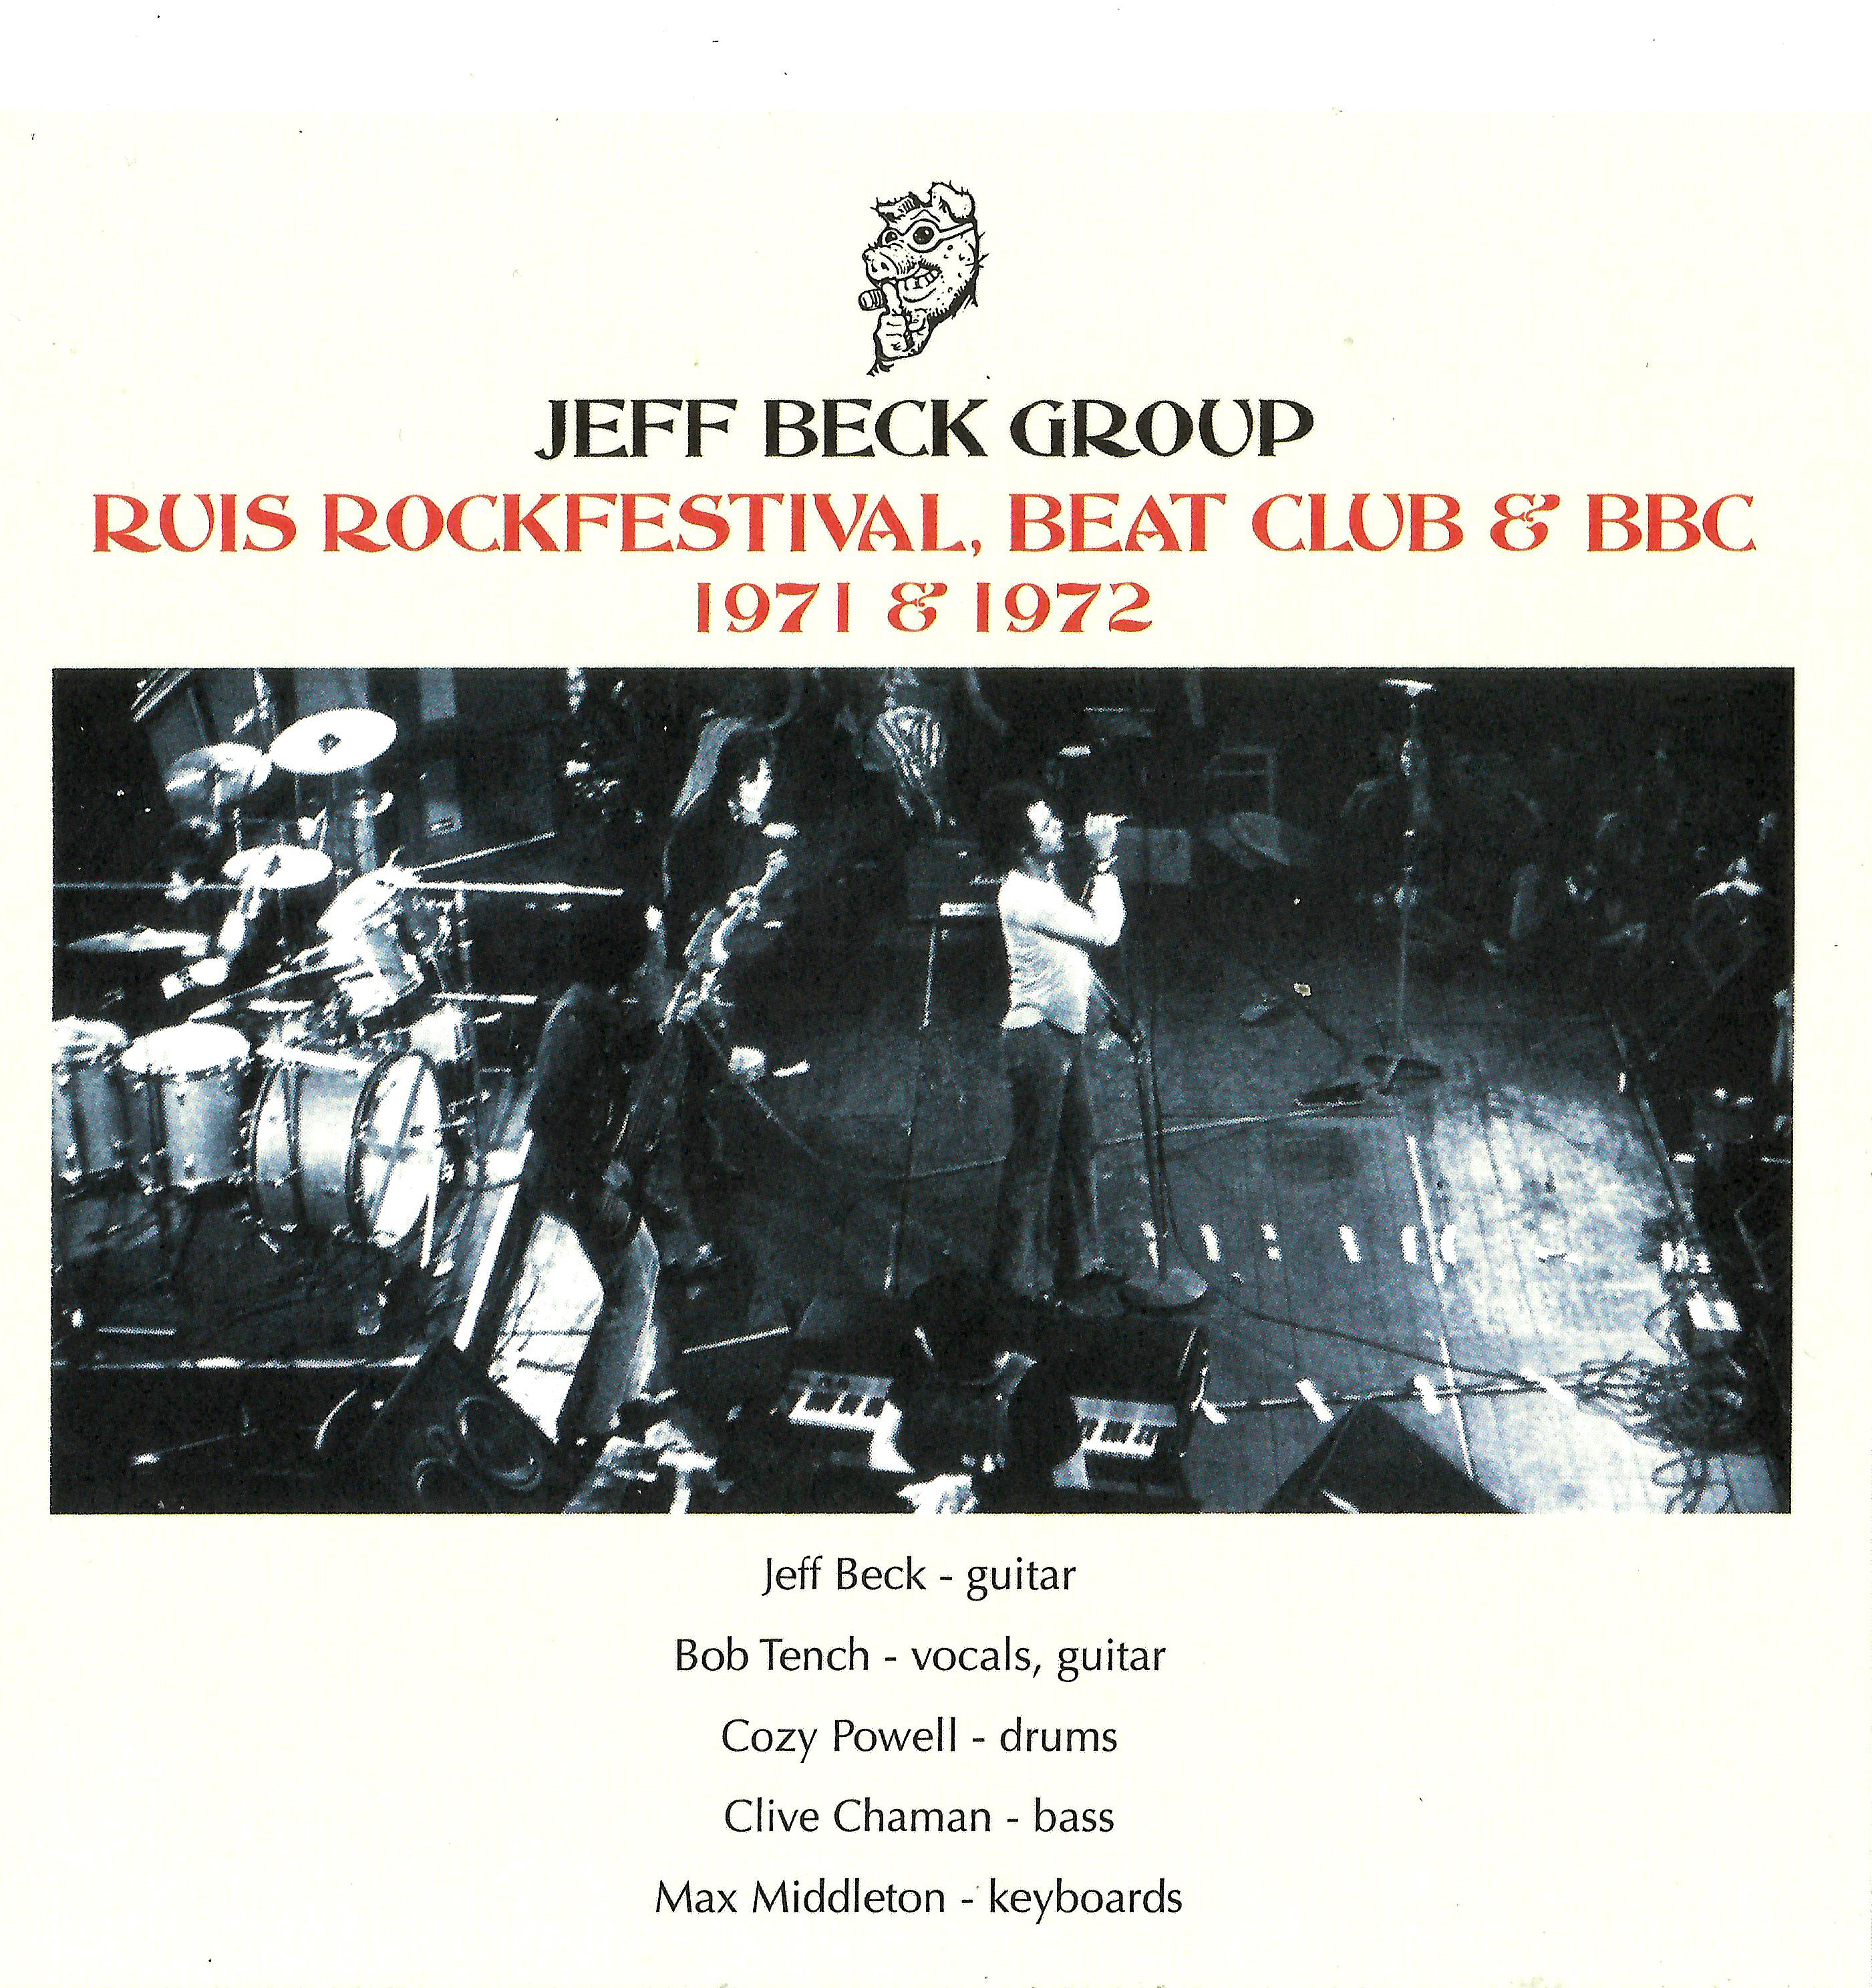 JeffBeck1972-03-25BeatClubRadioBremensTVStudioGermany (1).jpg